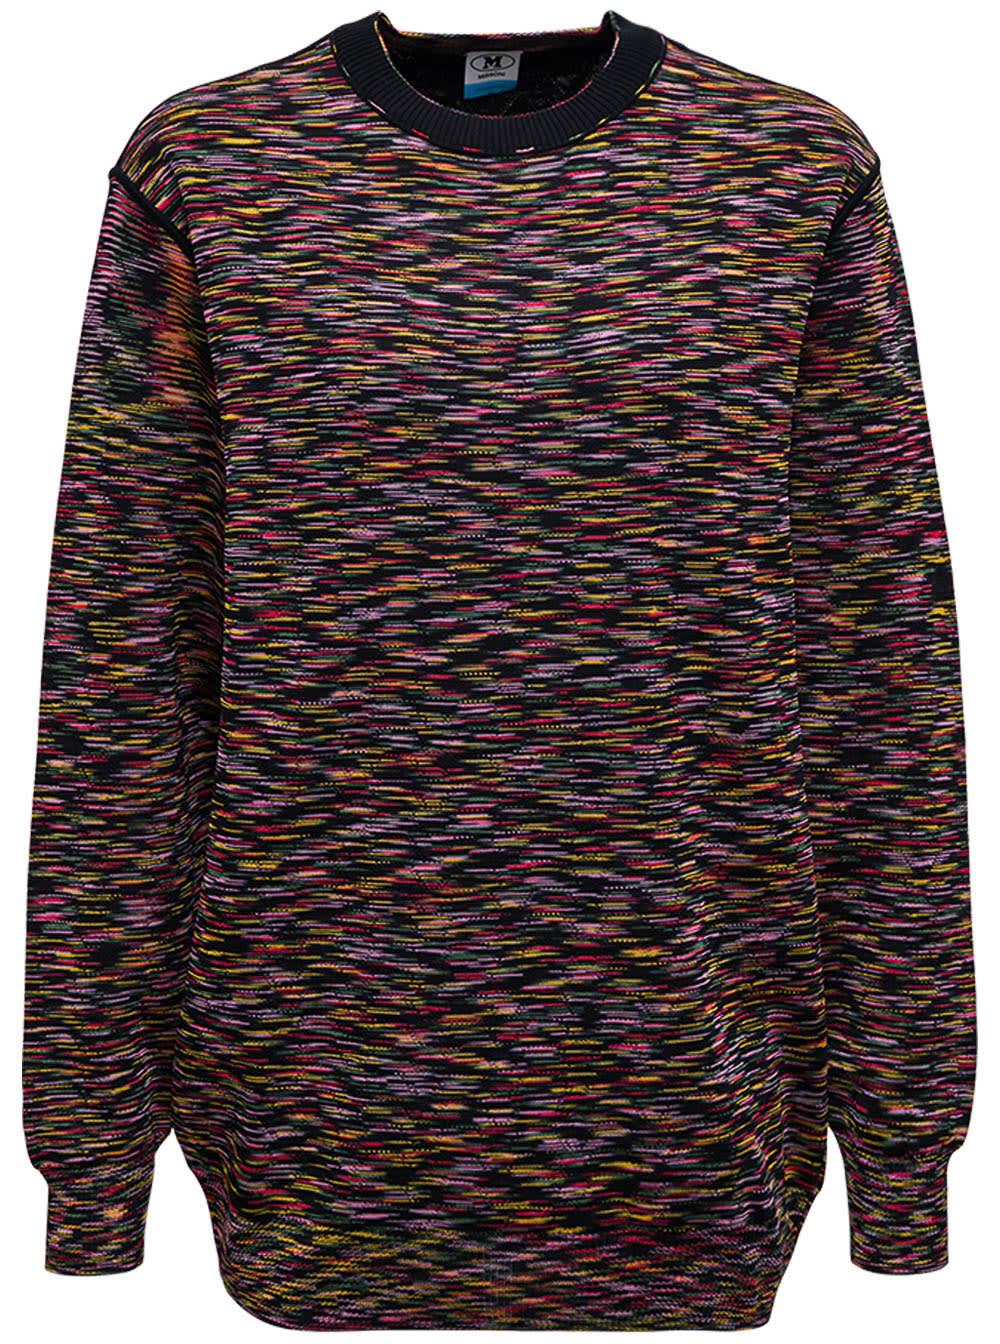 M Missoni Multicolor Wool Blend Sweater M Missoni